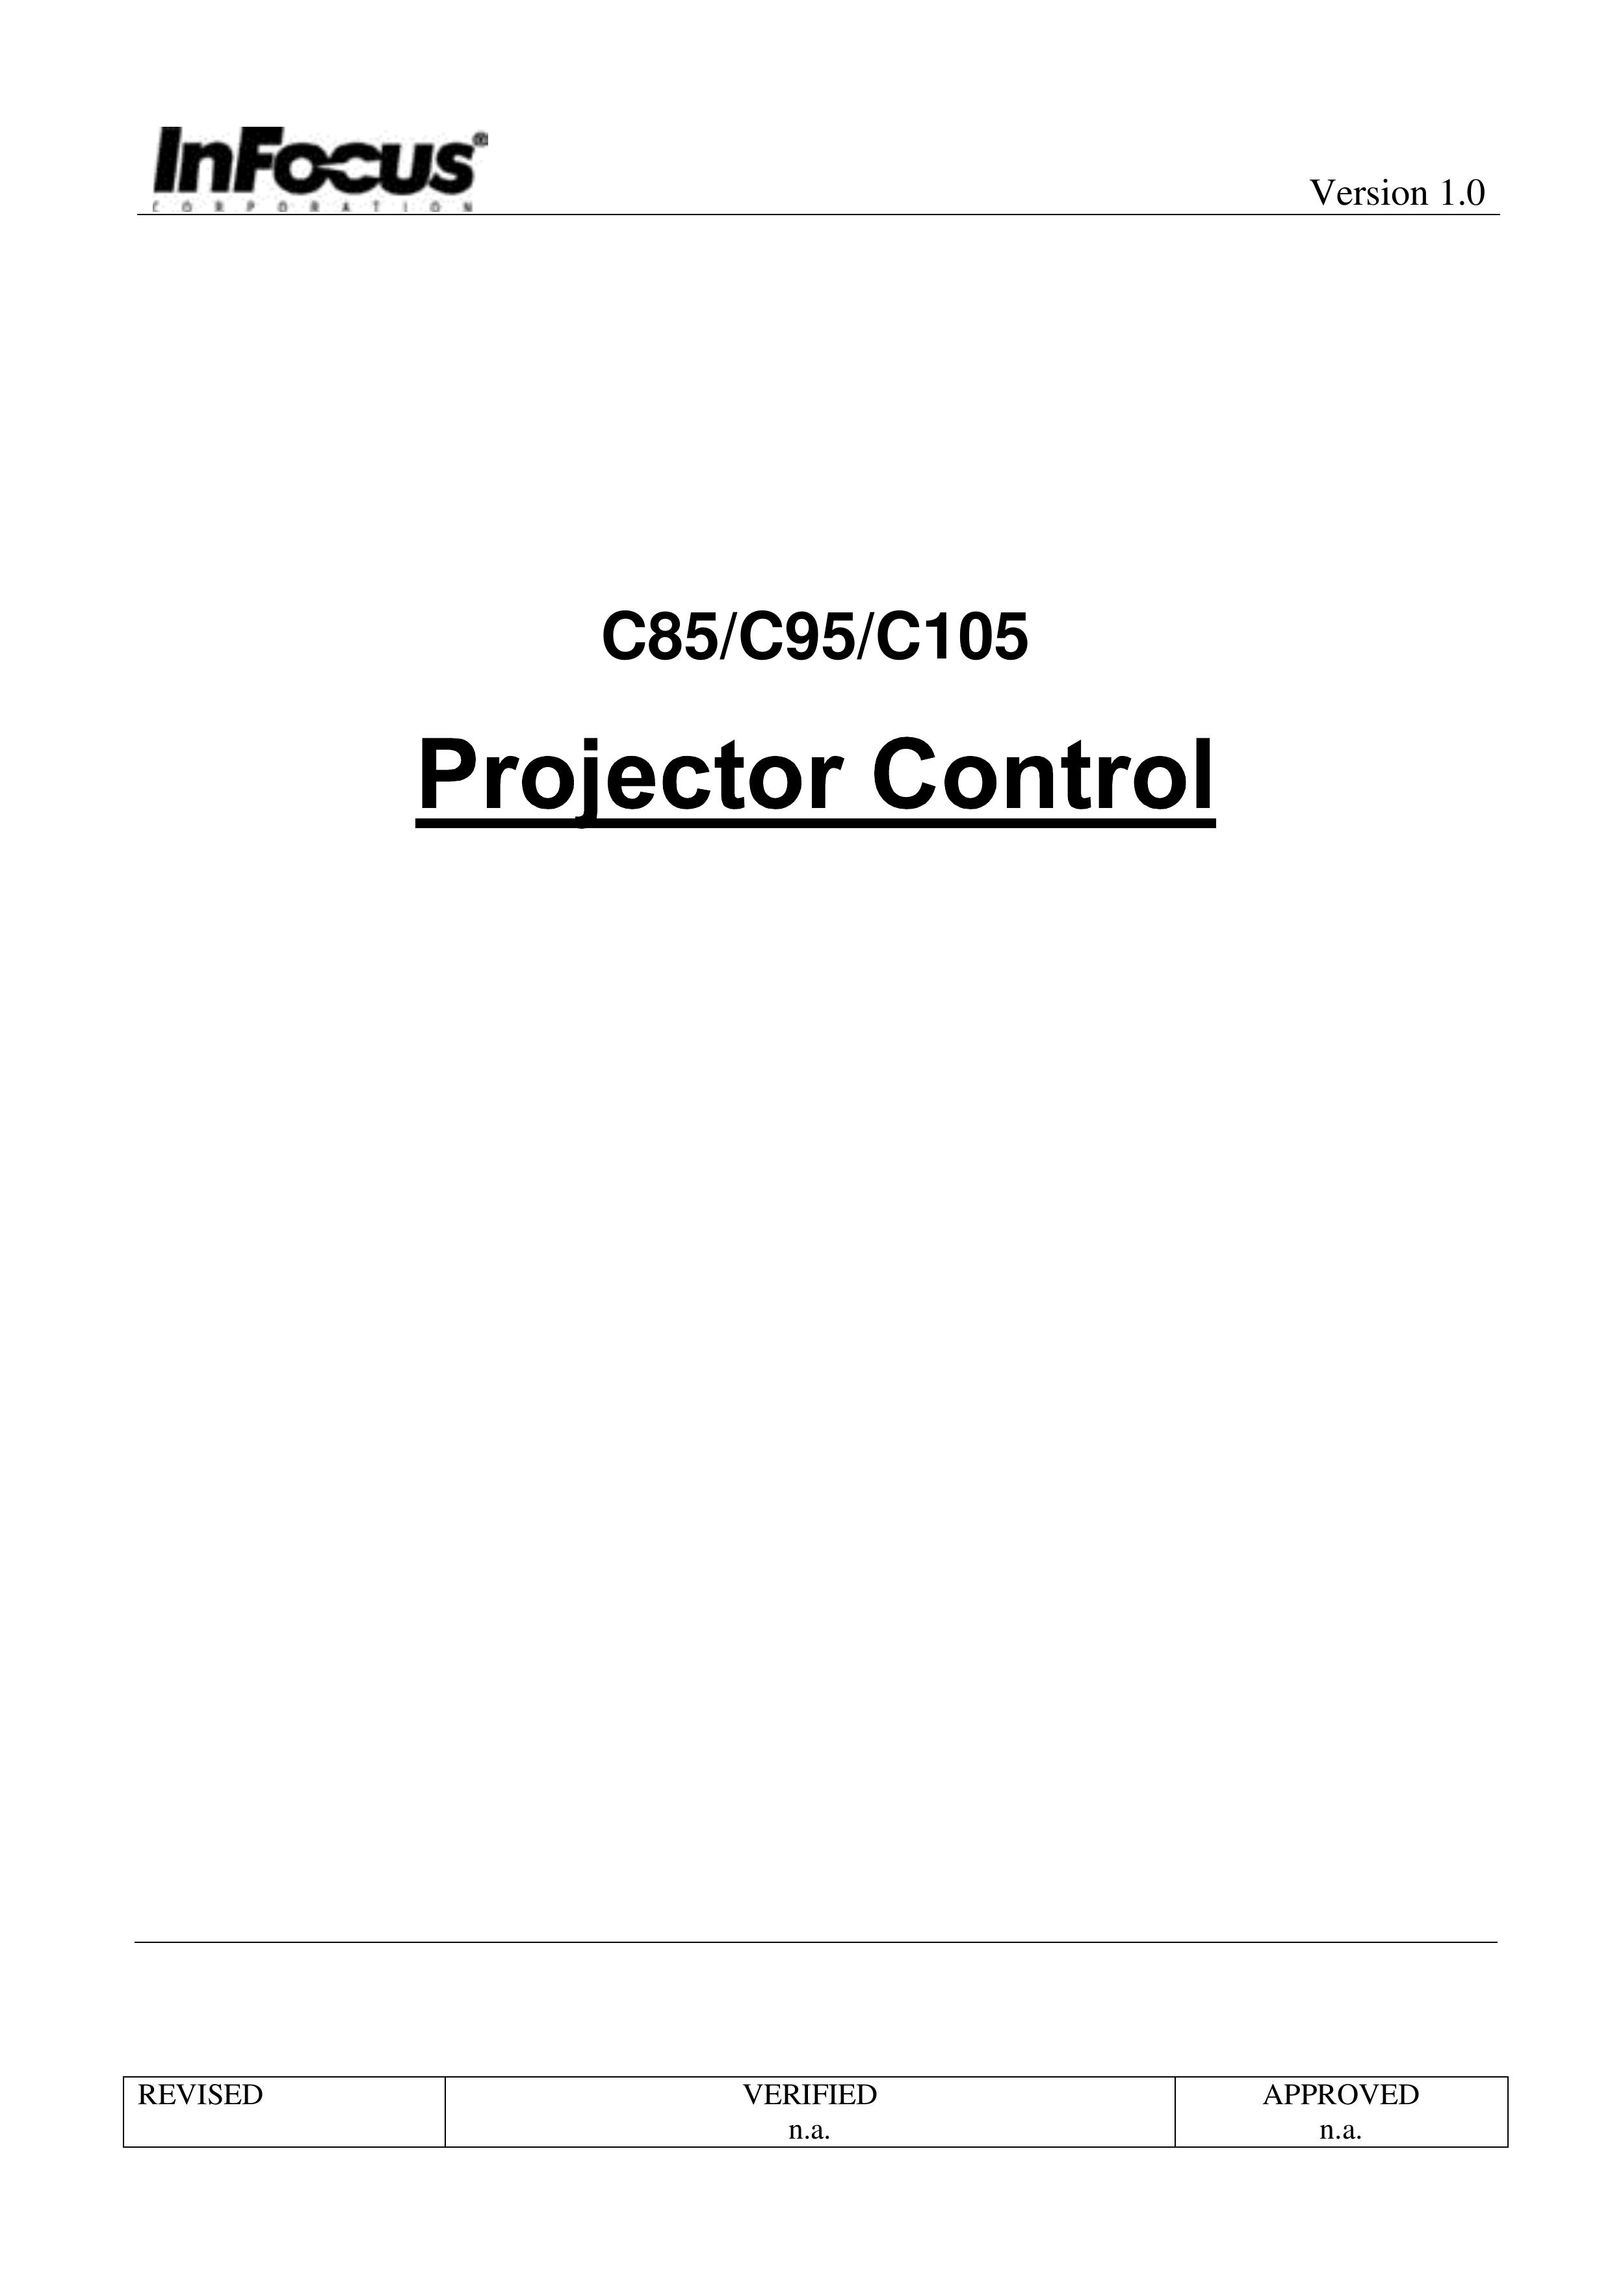 InFocus C105 Projector User Manual